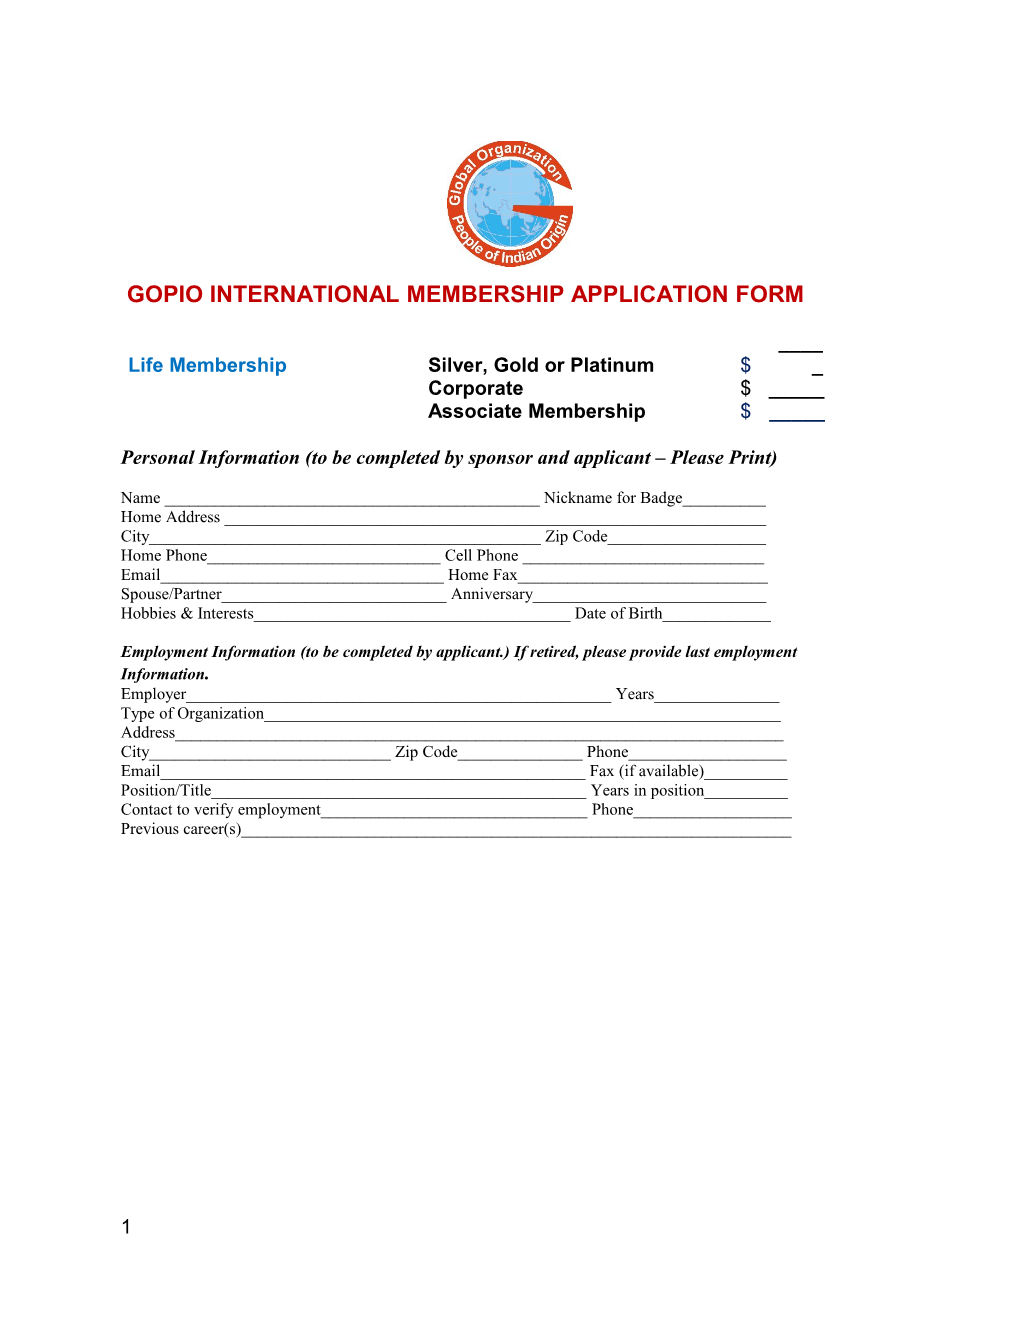 Gopio International Membership Application Form